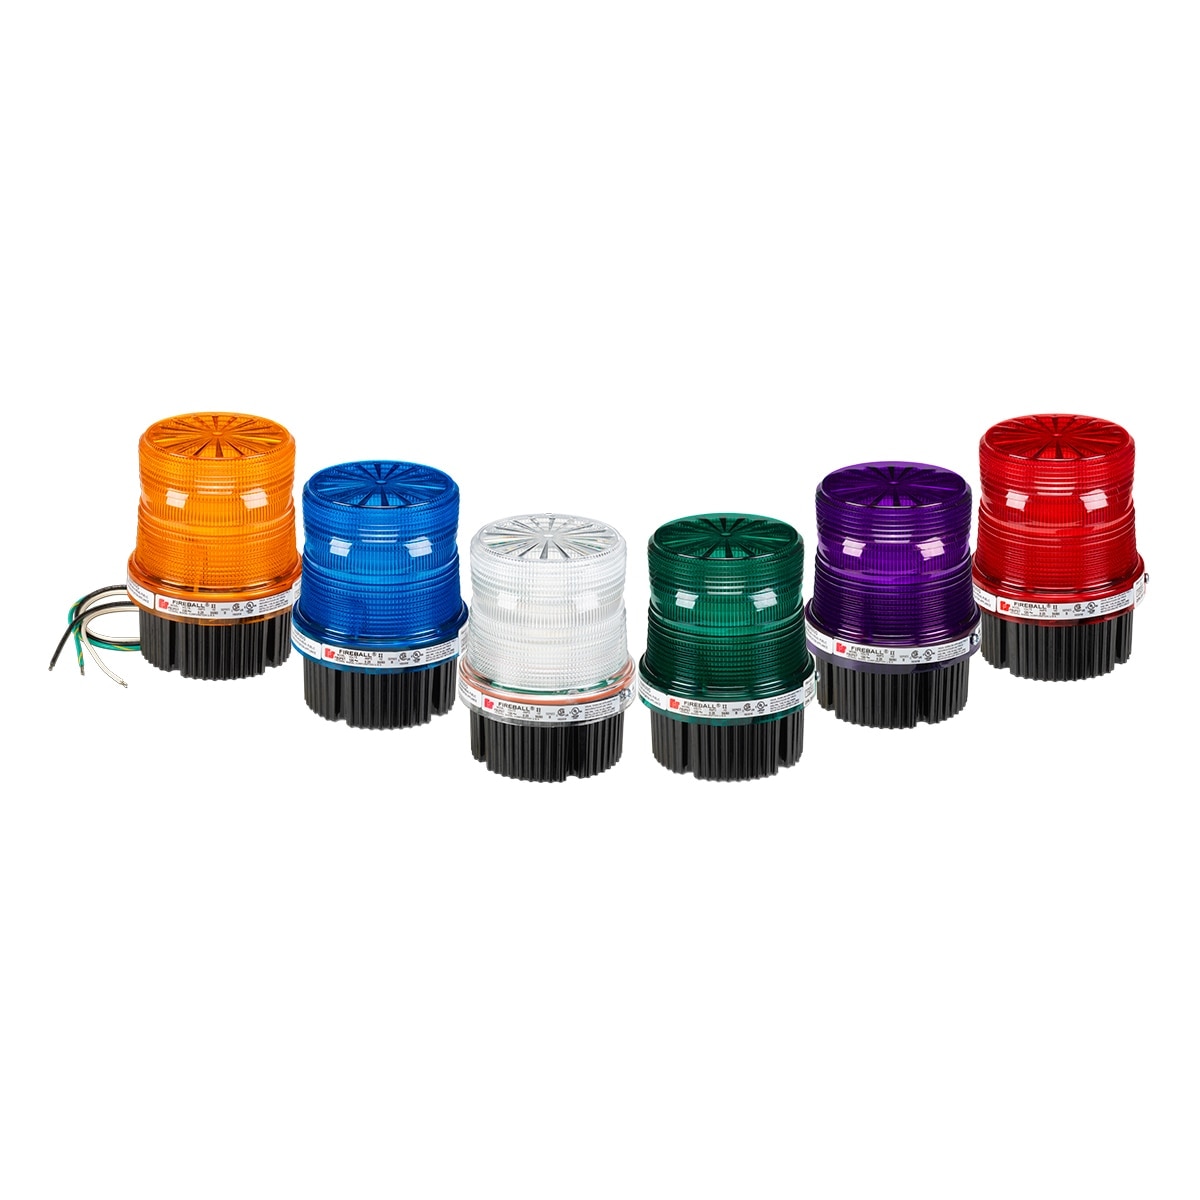 Federal Signal FB2PST Fireball II Strobe Warning Light T137191 for sale online 